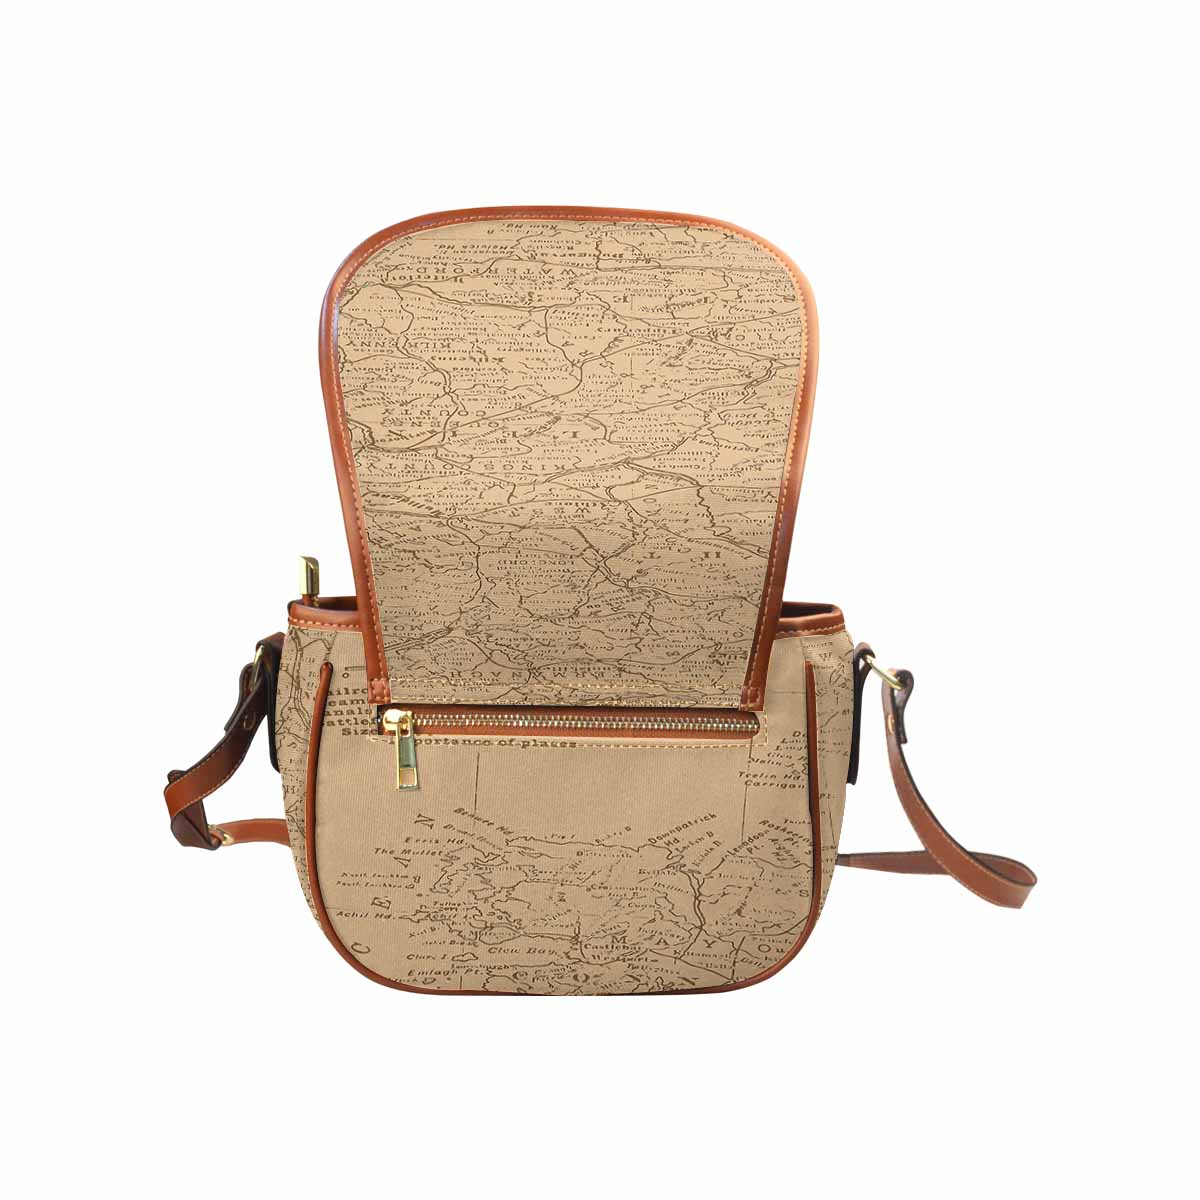 Antique Map design Handbag, saddle bag, Design 51